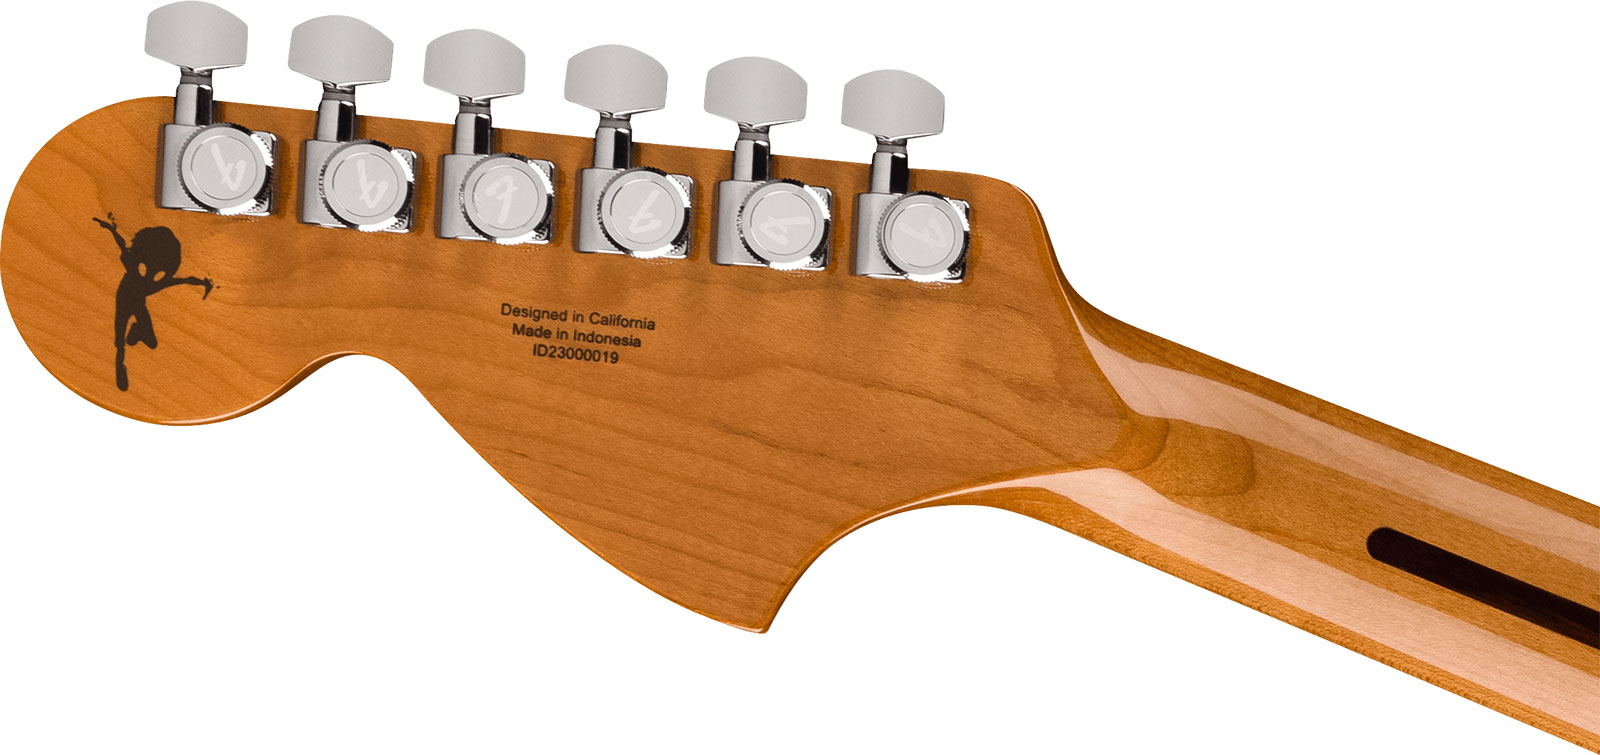 Fender Tom Delonge Starcaster 1h Seymour Duncan Ht Rw - Satin Surf Green - Semi-hollow electric guitar - Variation 4